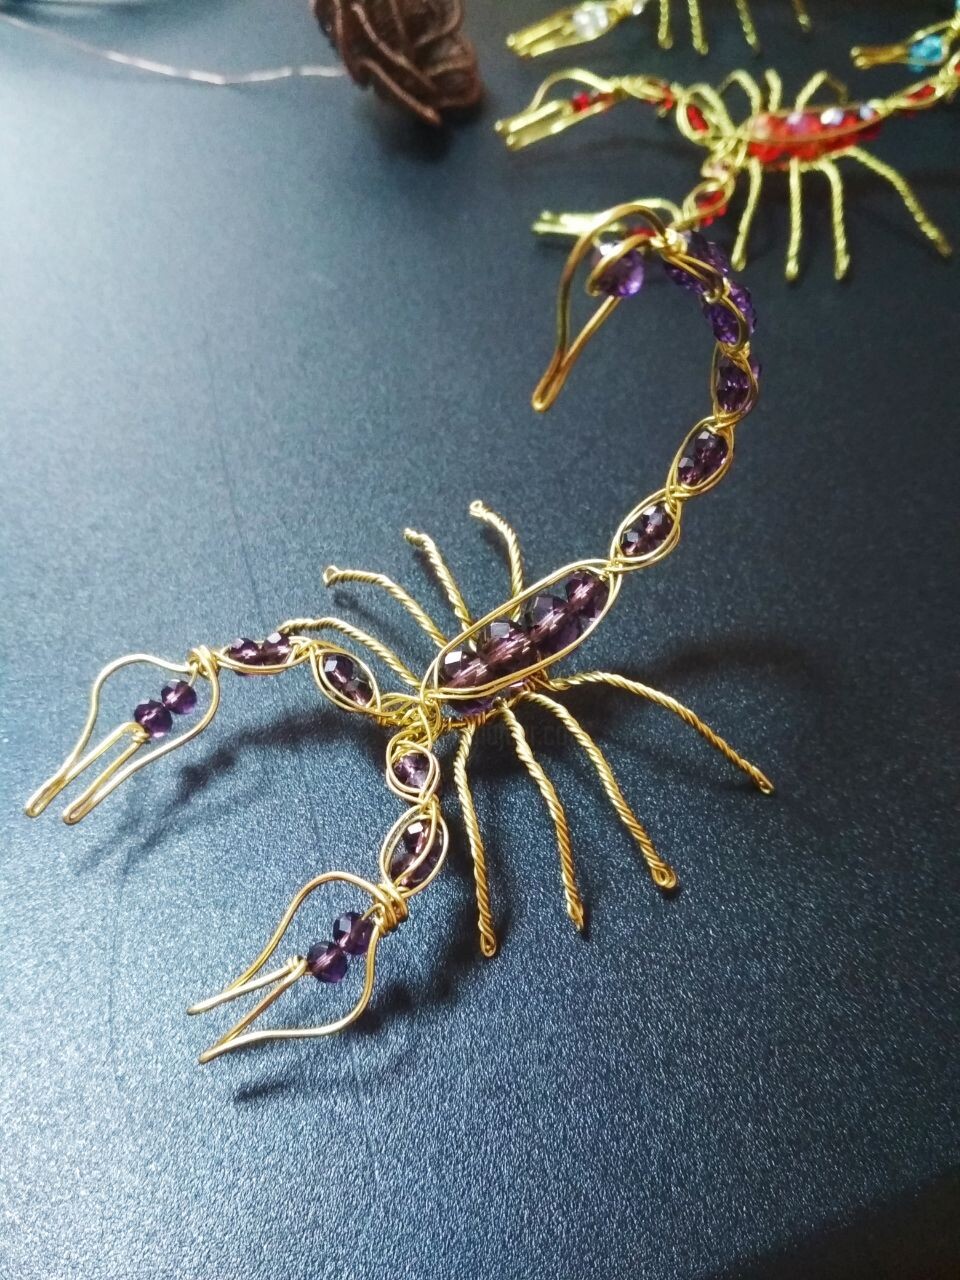 Wire Scorpion, Sculpture by Kolobrawen